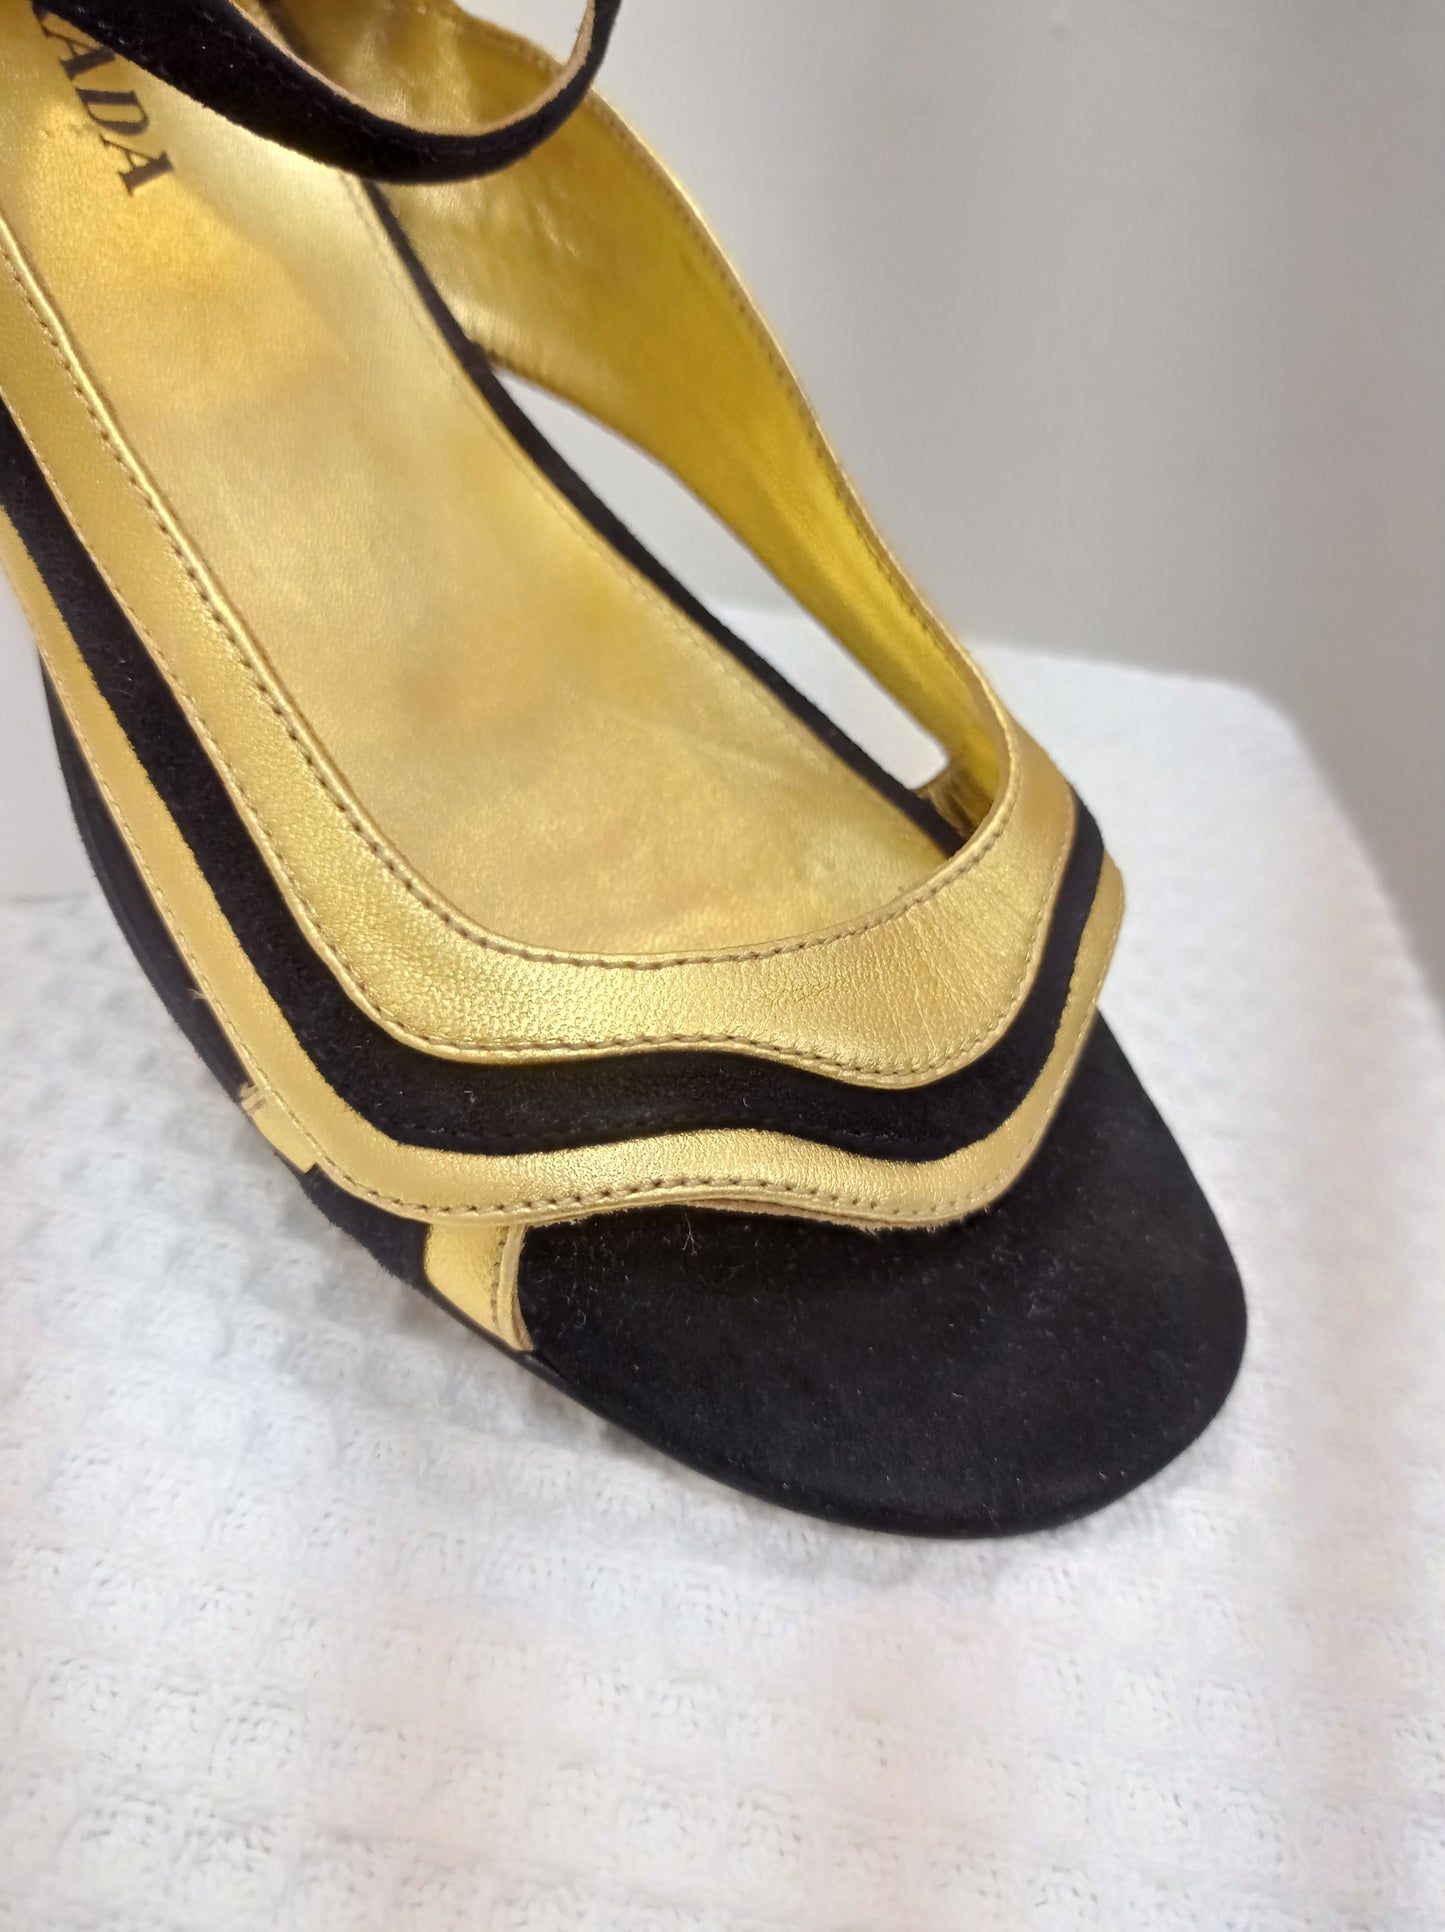 Prada Gold/Black Leather Sandals Size 6